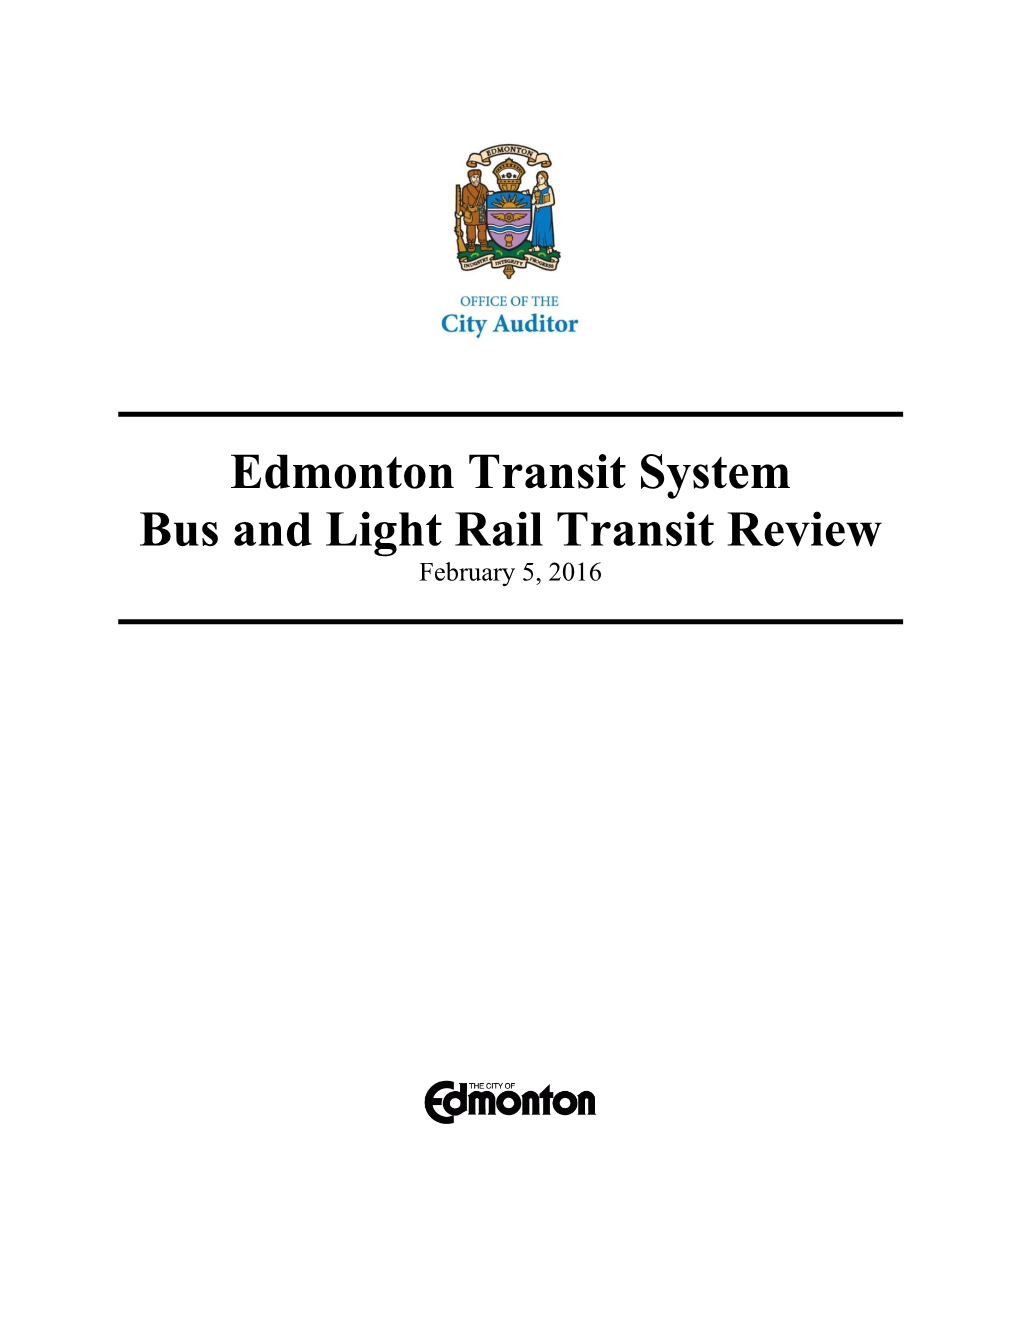 Edmonton Transit System Bus and Light Rail Transit Review